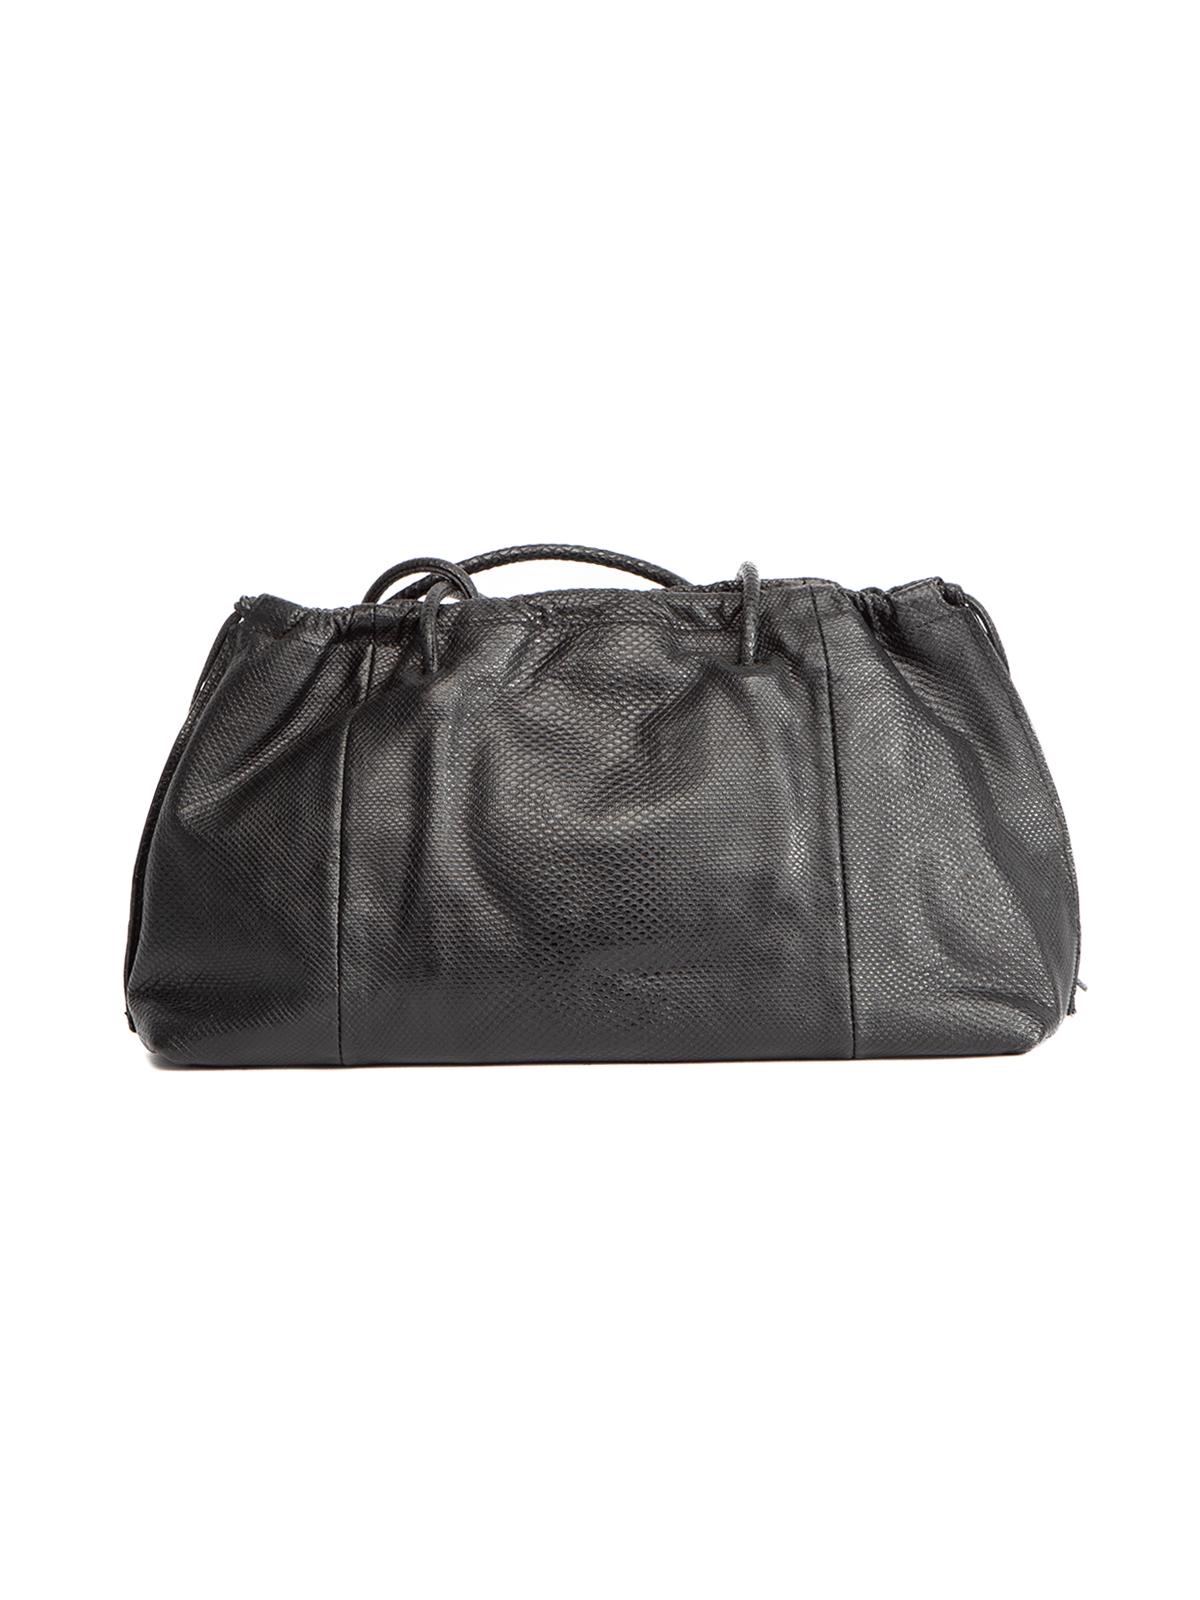 Pre-Loved Gucci Women's Embossed Leather Shoulder Bag 1